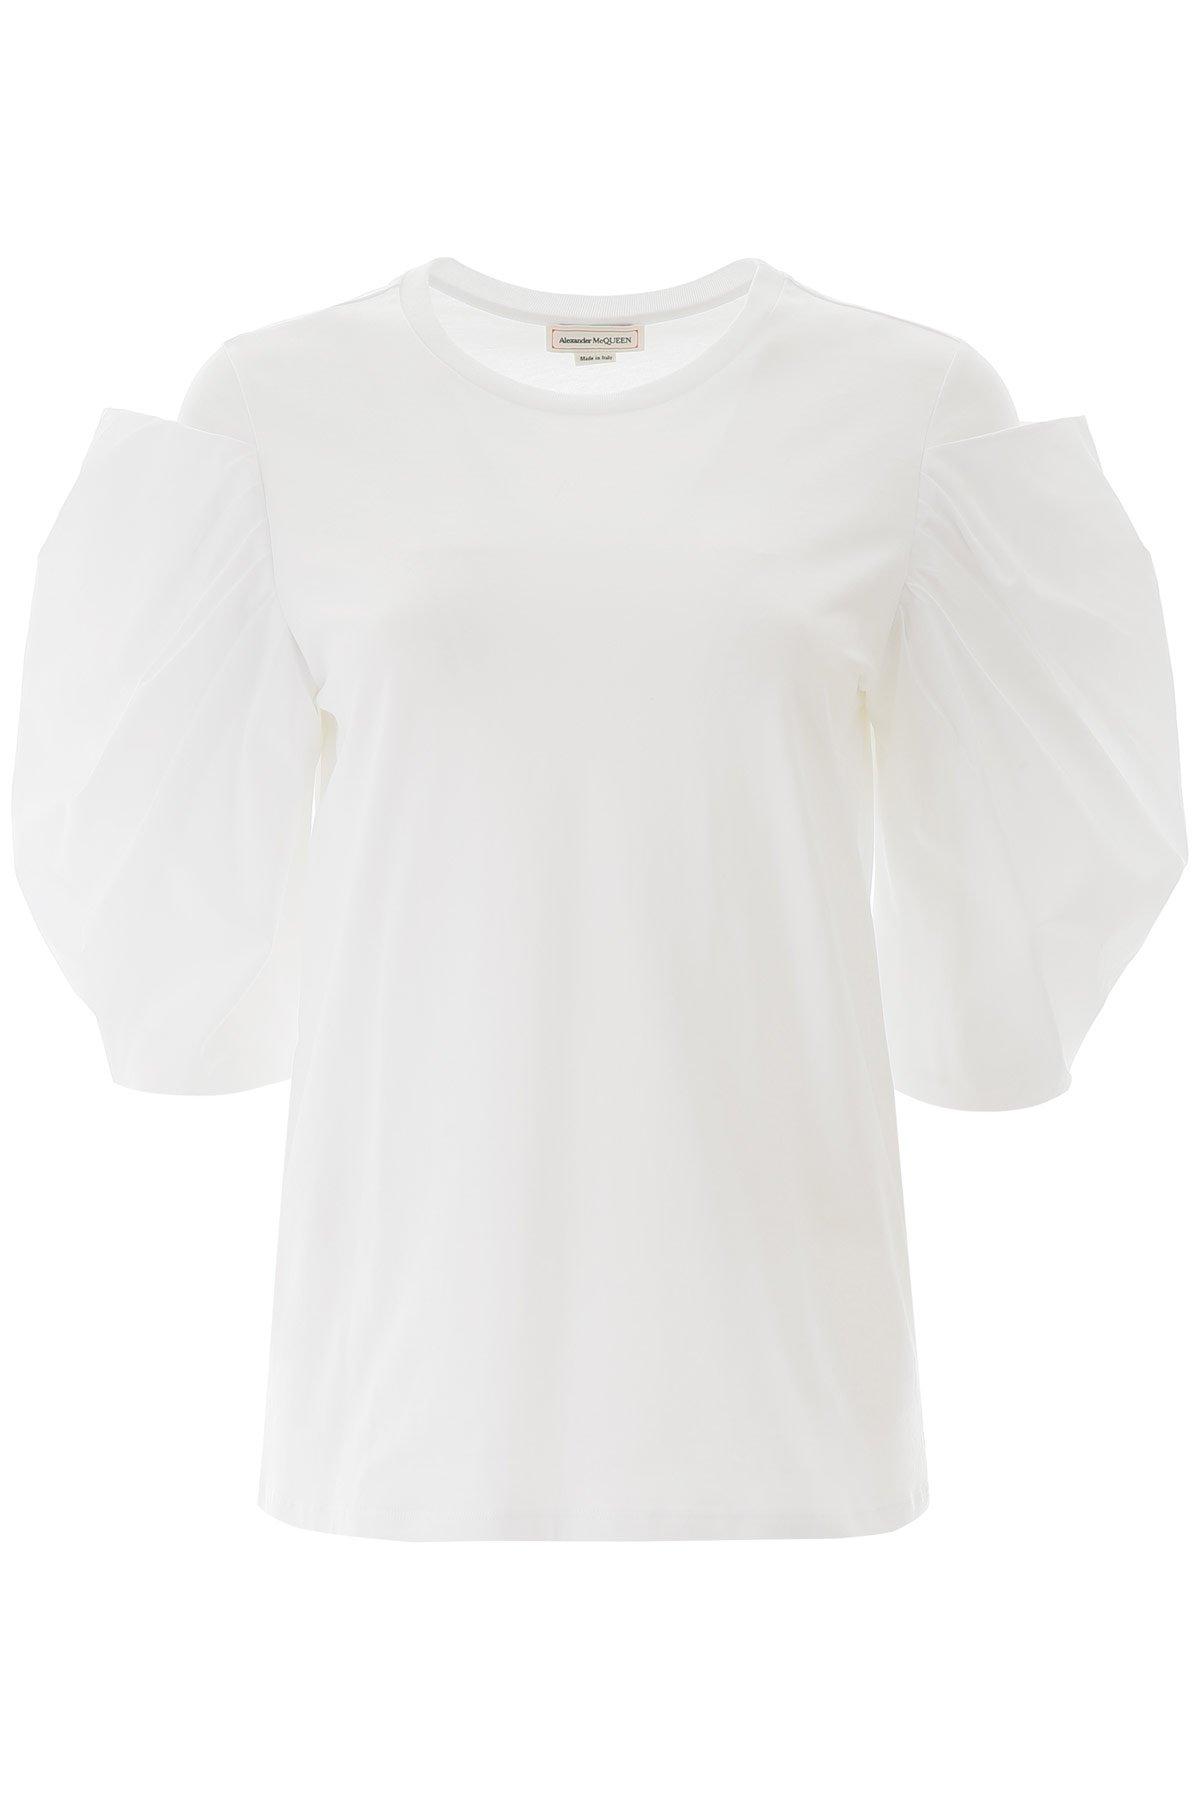 Alexander McQueen Cotton Puff Sleeve Top in White - Save 9% - Lyst